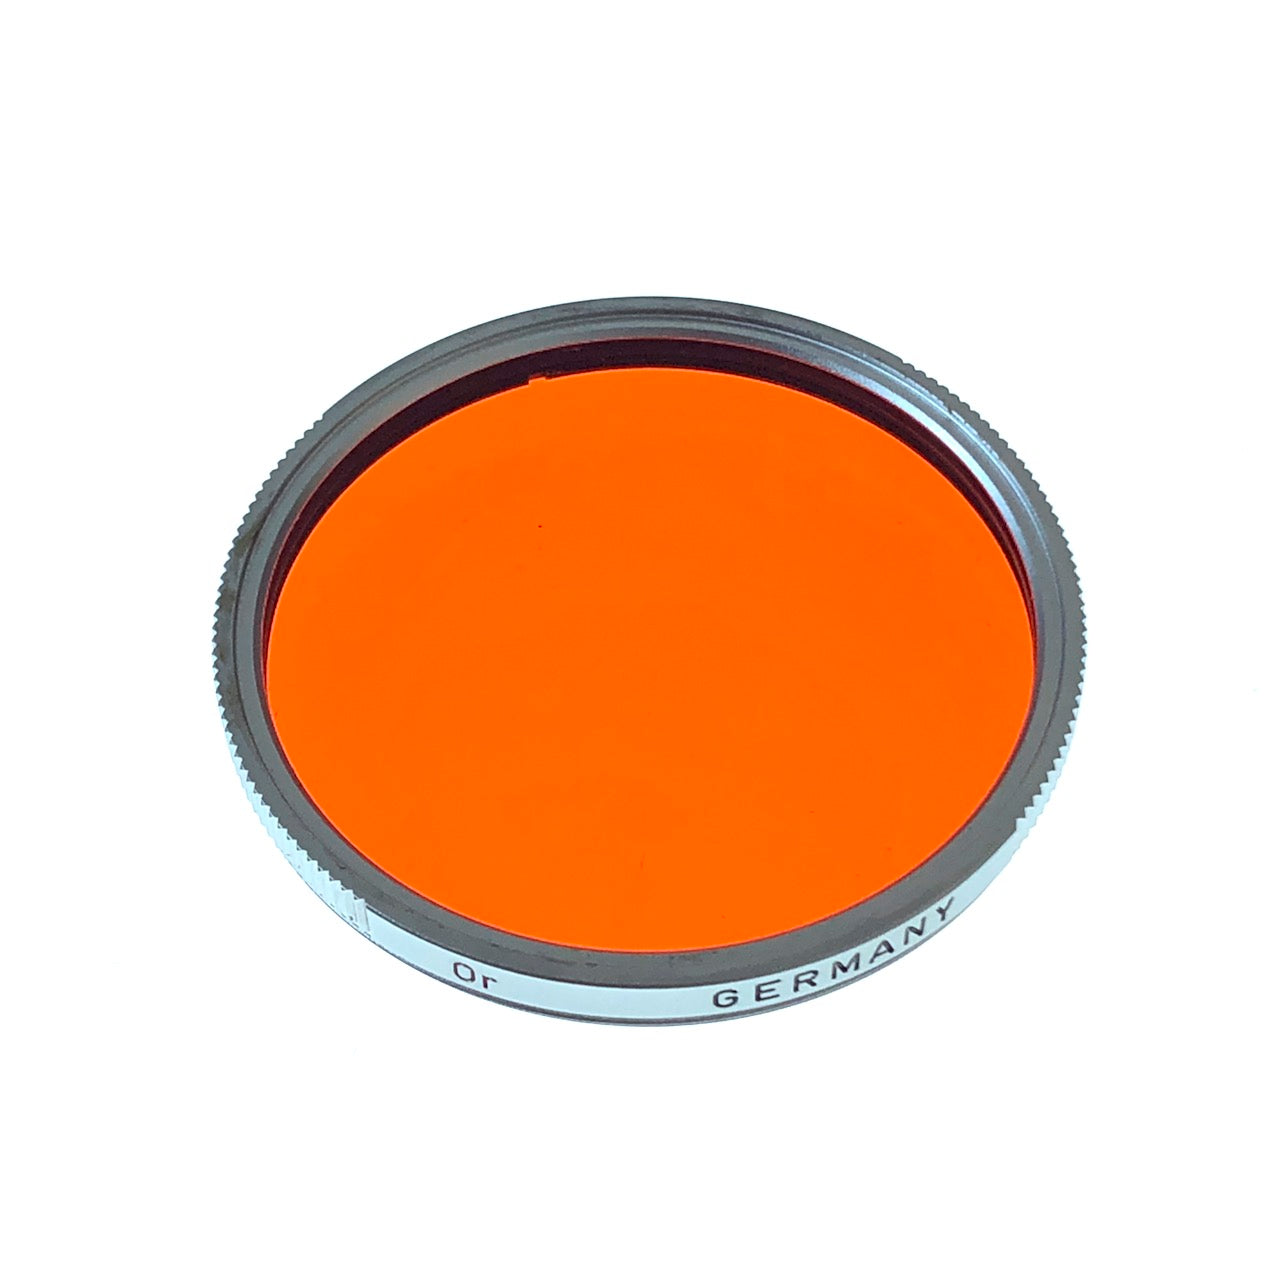 Leitz Or (orange) filter for 43mm thread.